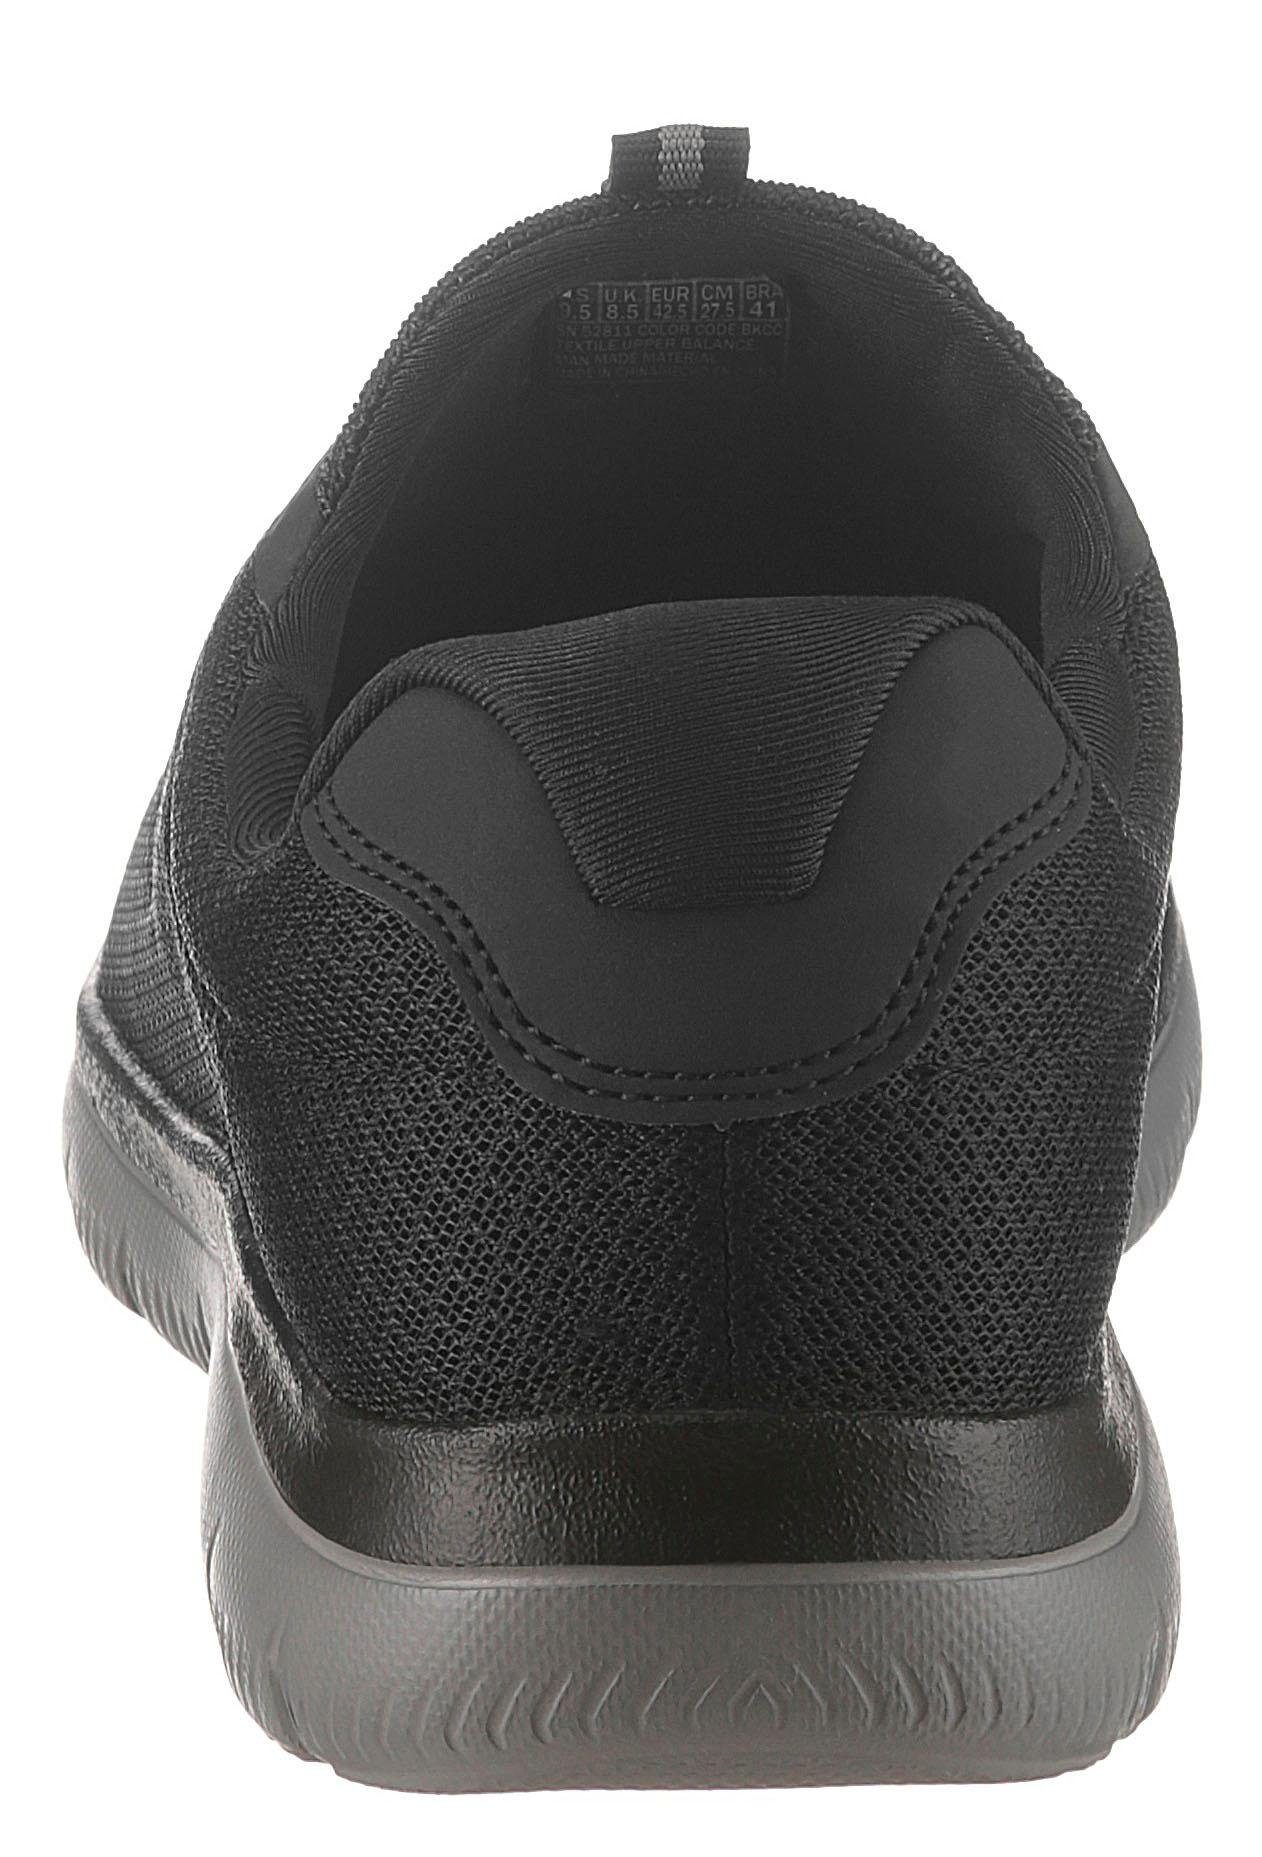 Sneaker Skechers Slip-On mit Summits black/charcoal komfortabler Foam-Ausstattung Memory